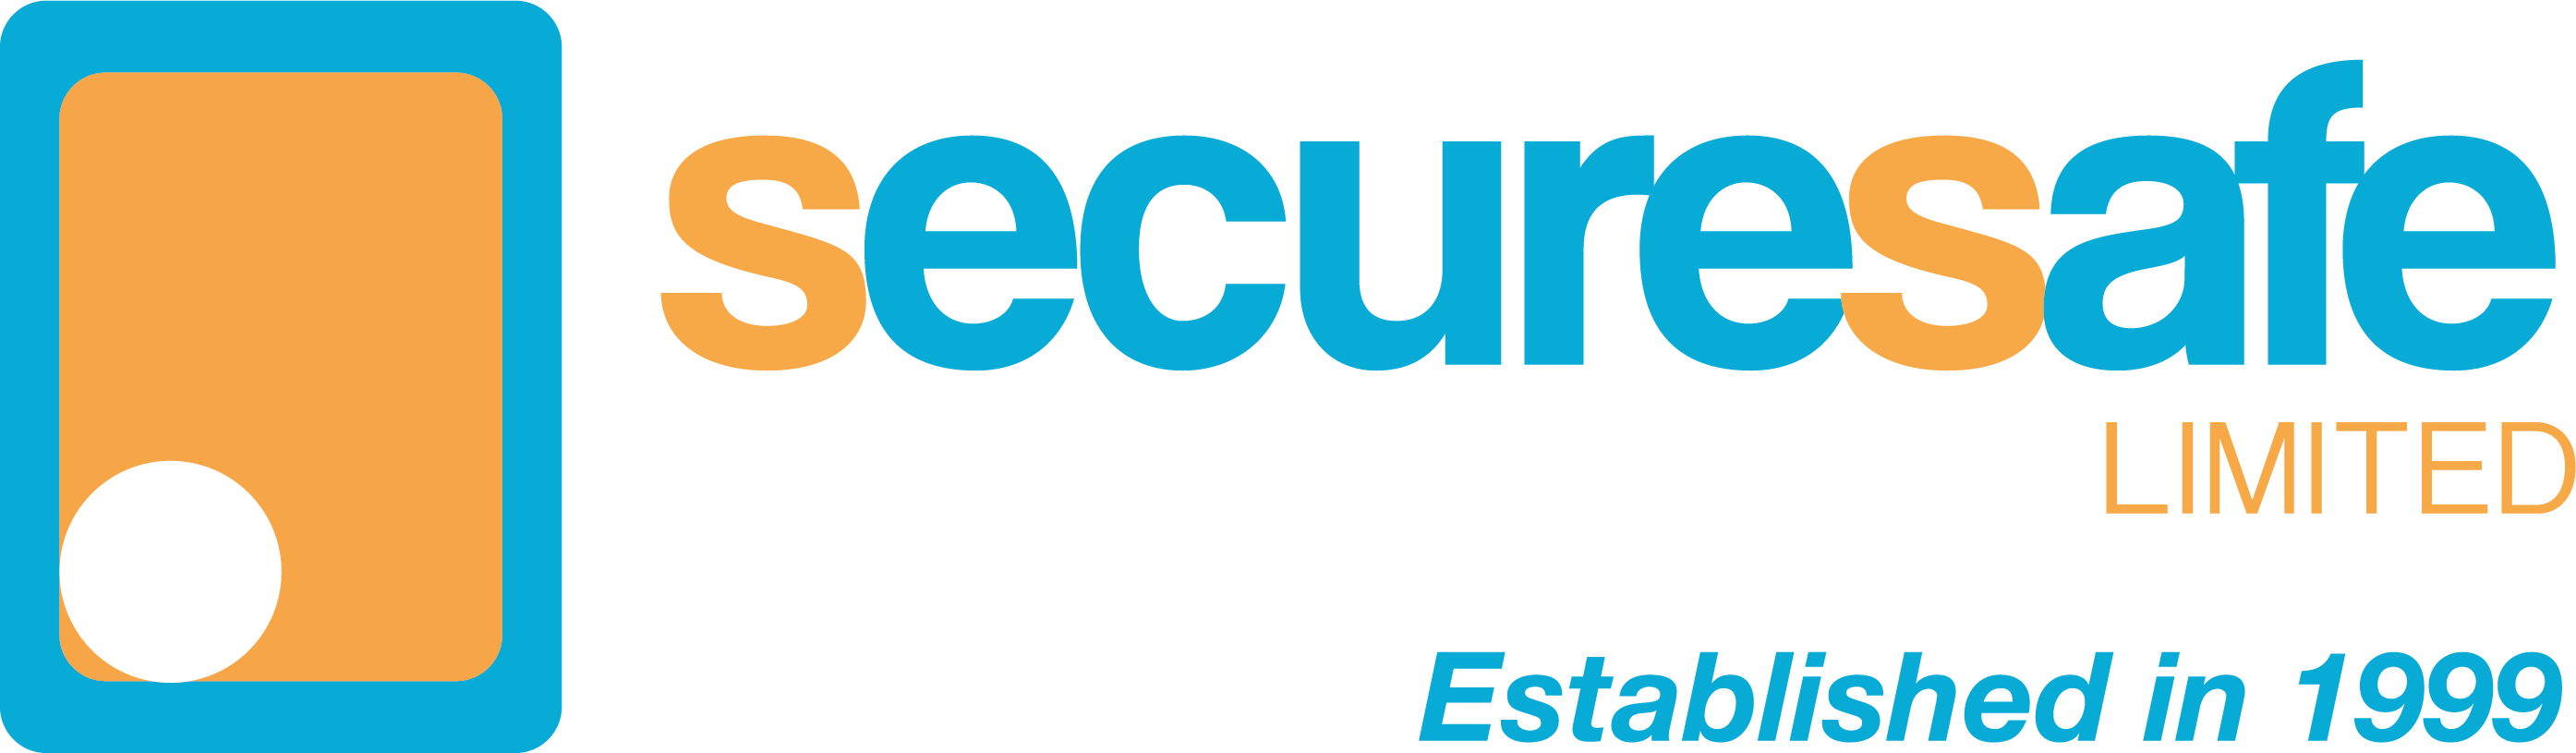 (c) Securesafe.co.uk